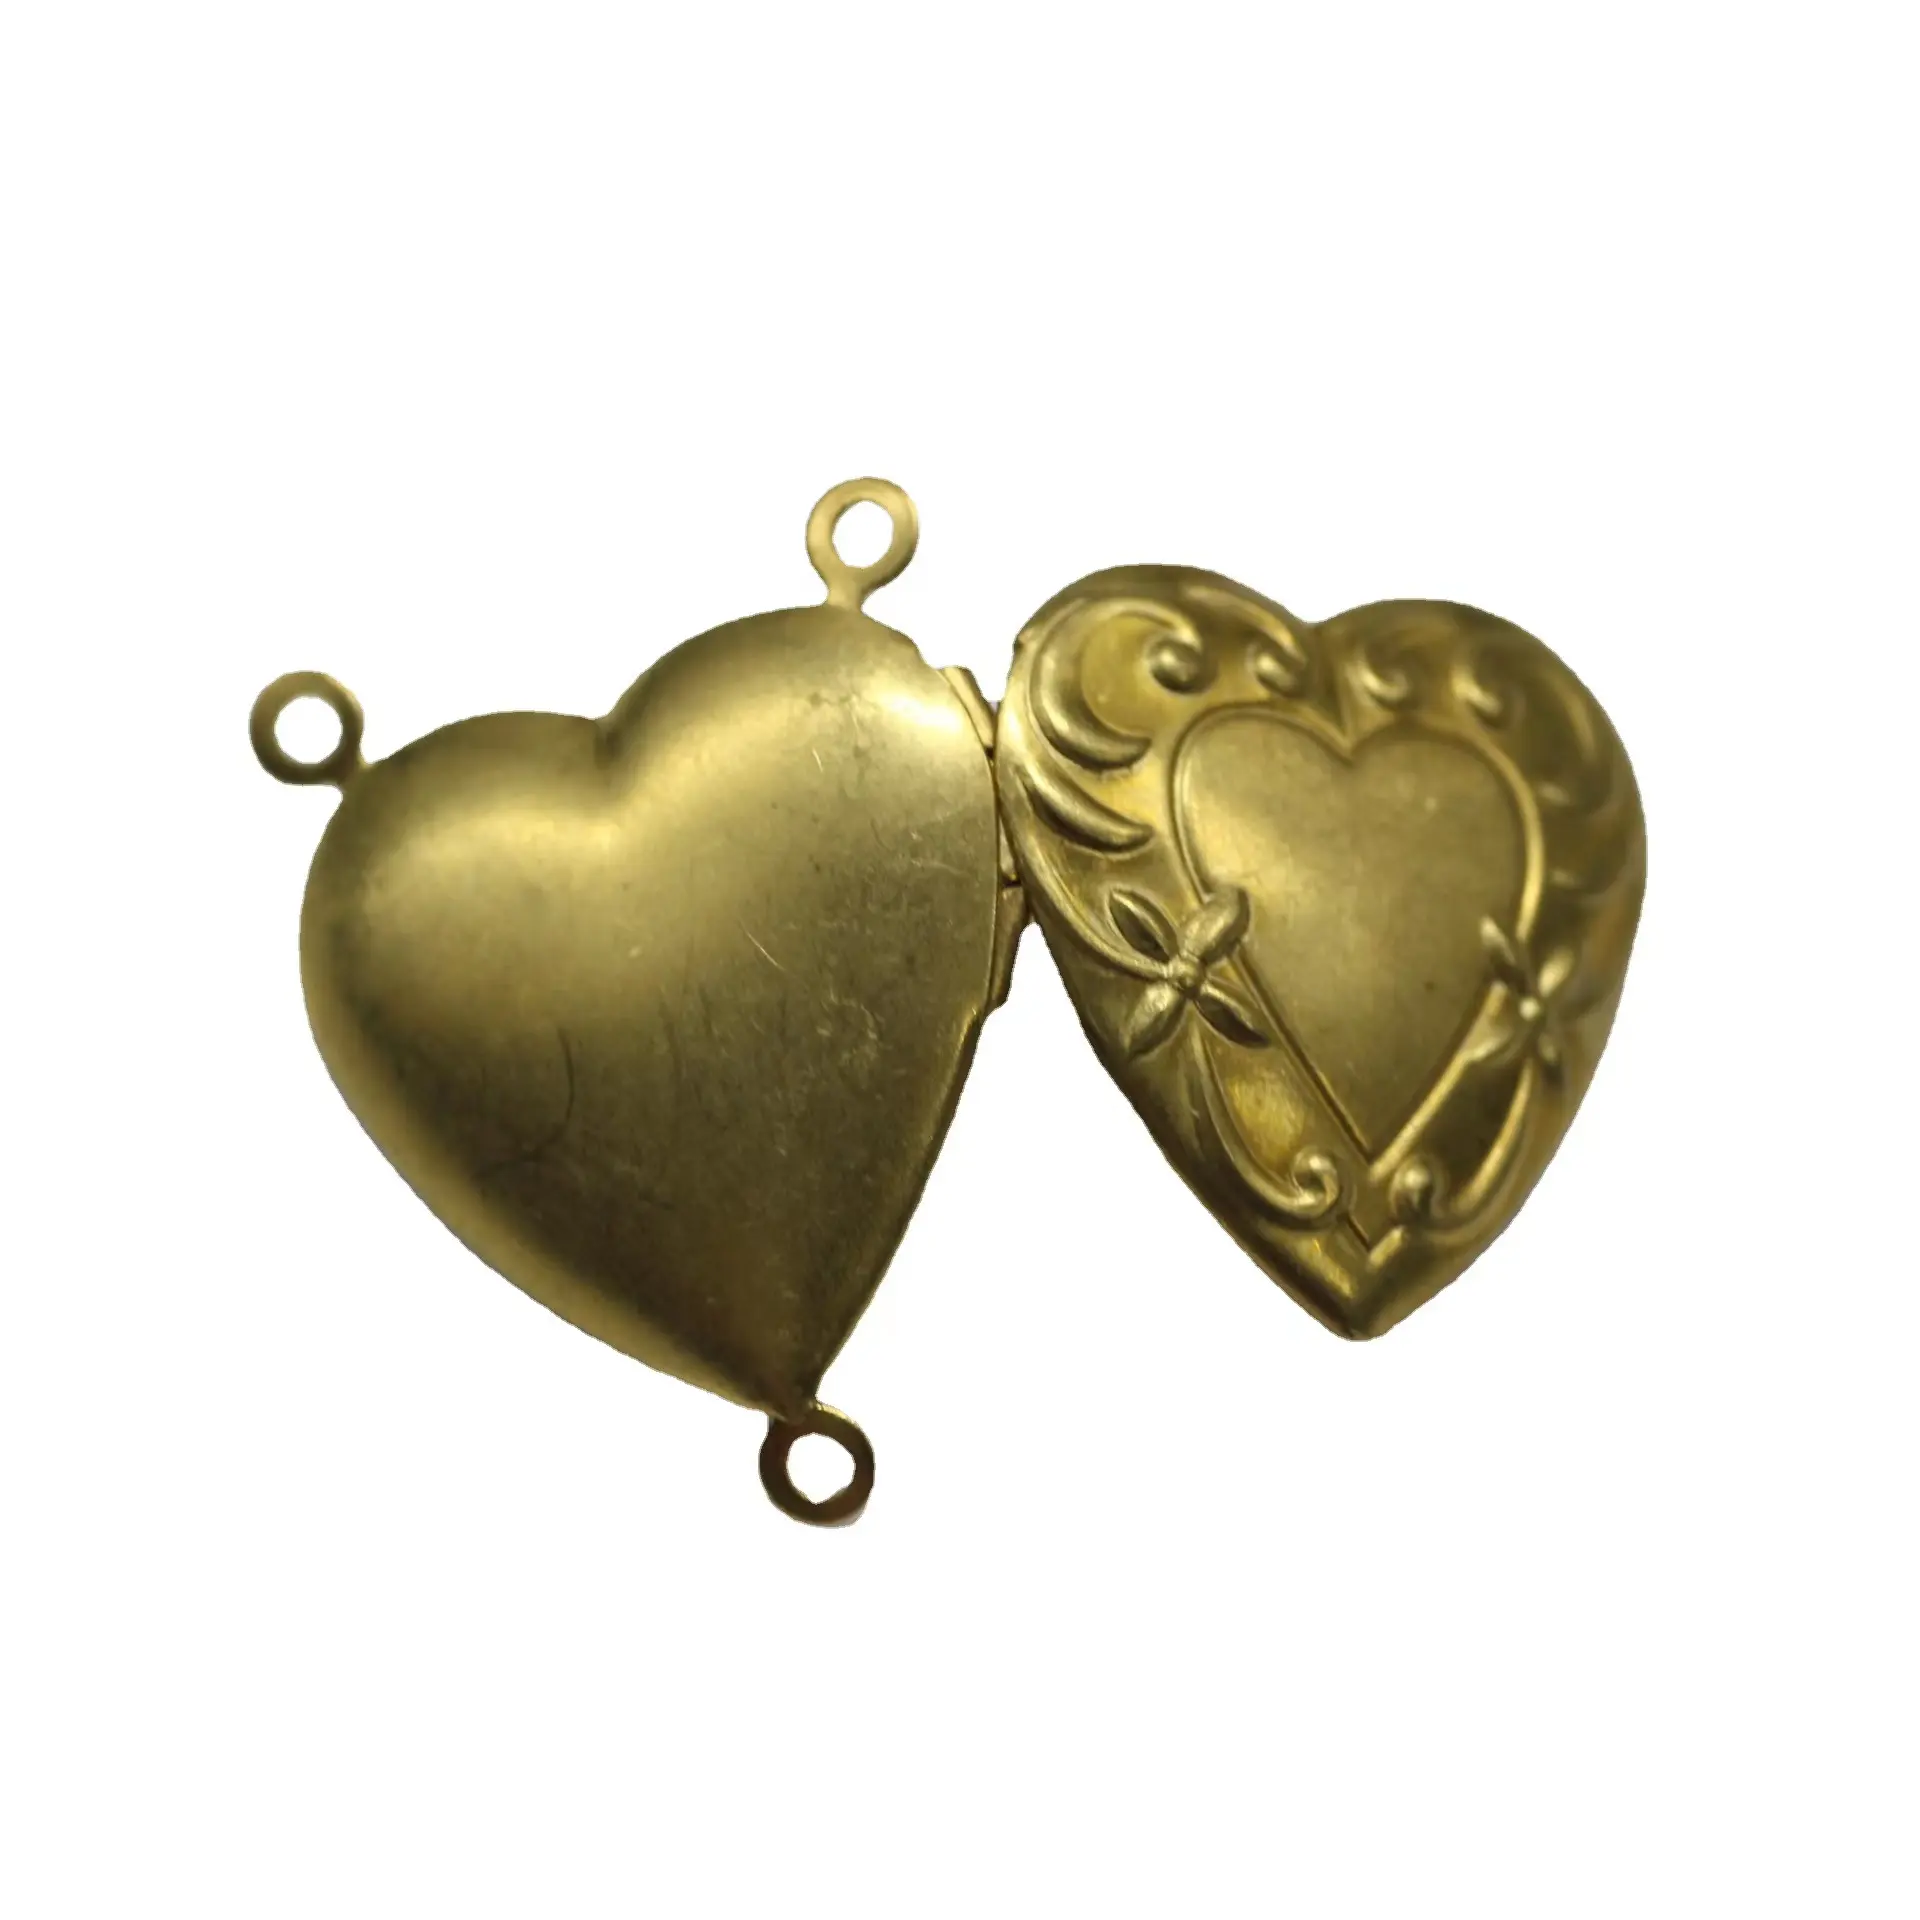 Pure copper heart-shaped box diy accessories metal accessories retro pocket watch box pendant